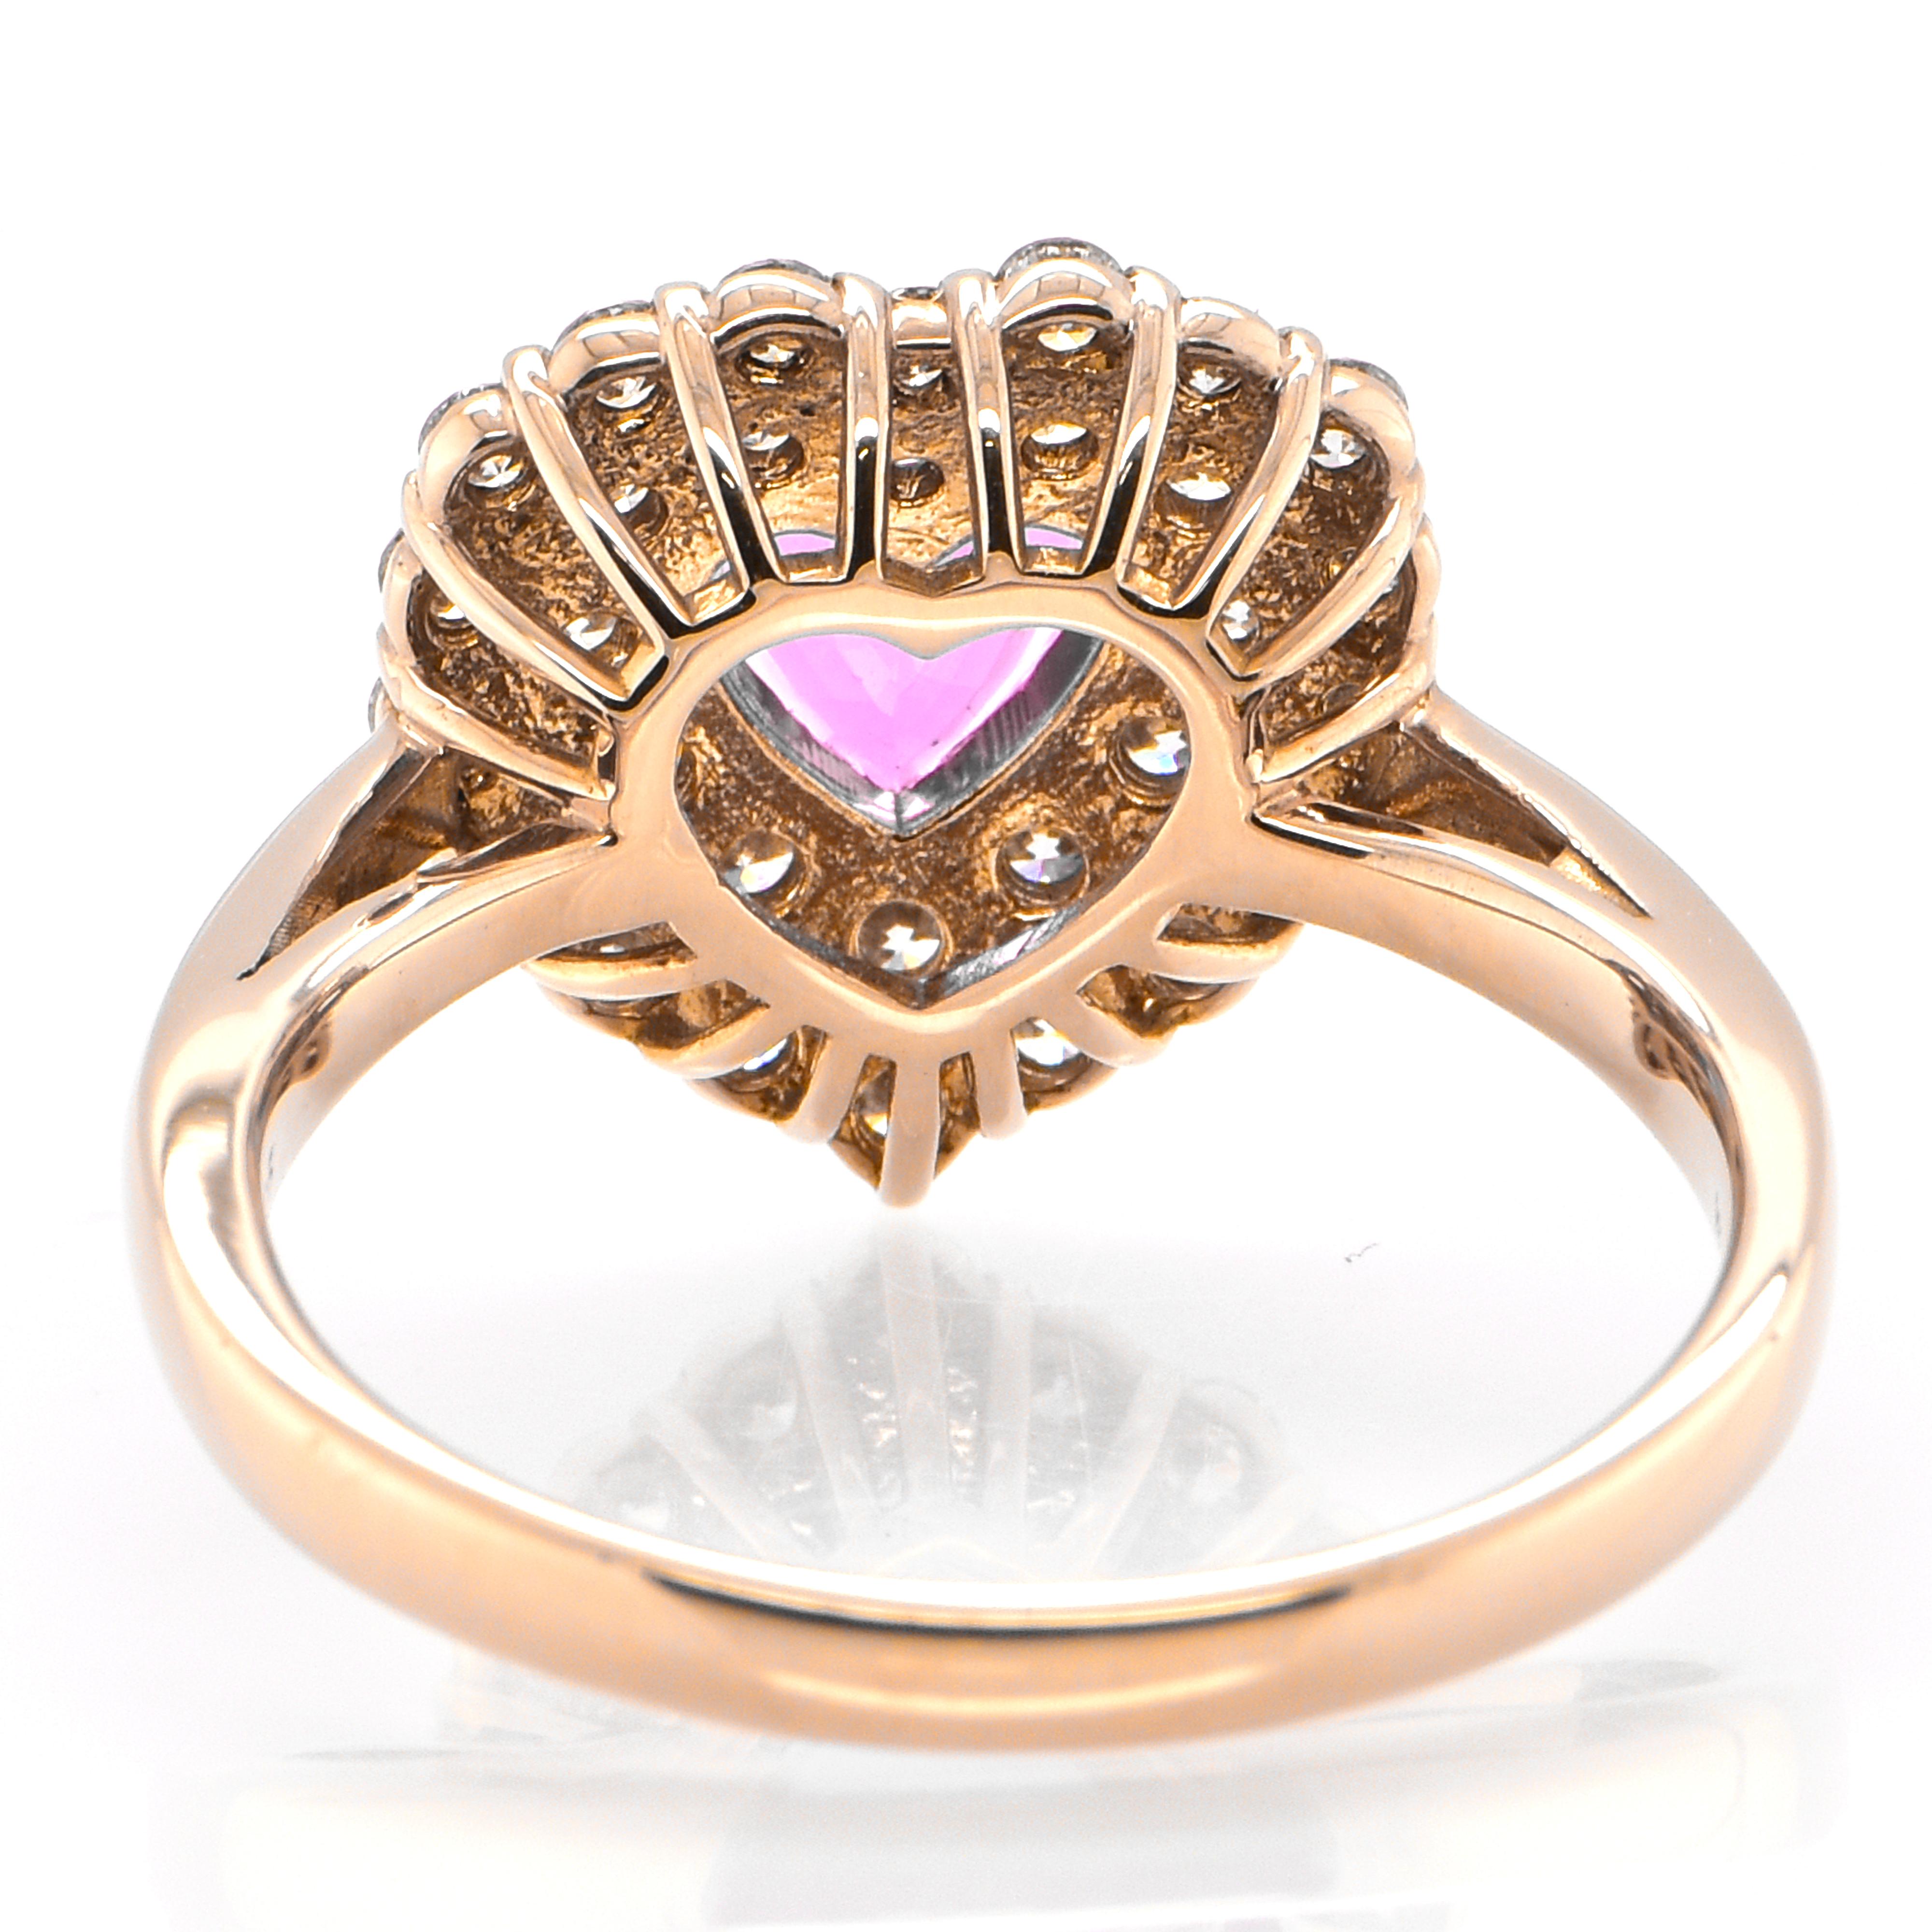 Women's 1.06 Carat Heart-Cut Pink Sapphire and Diamond Ring Set in 18 Karat Pink Gold